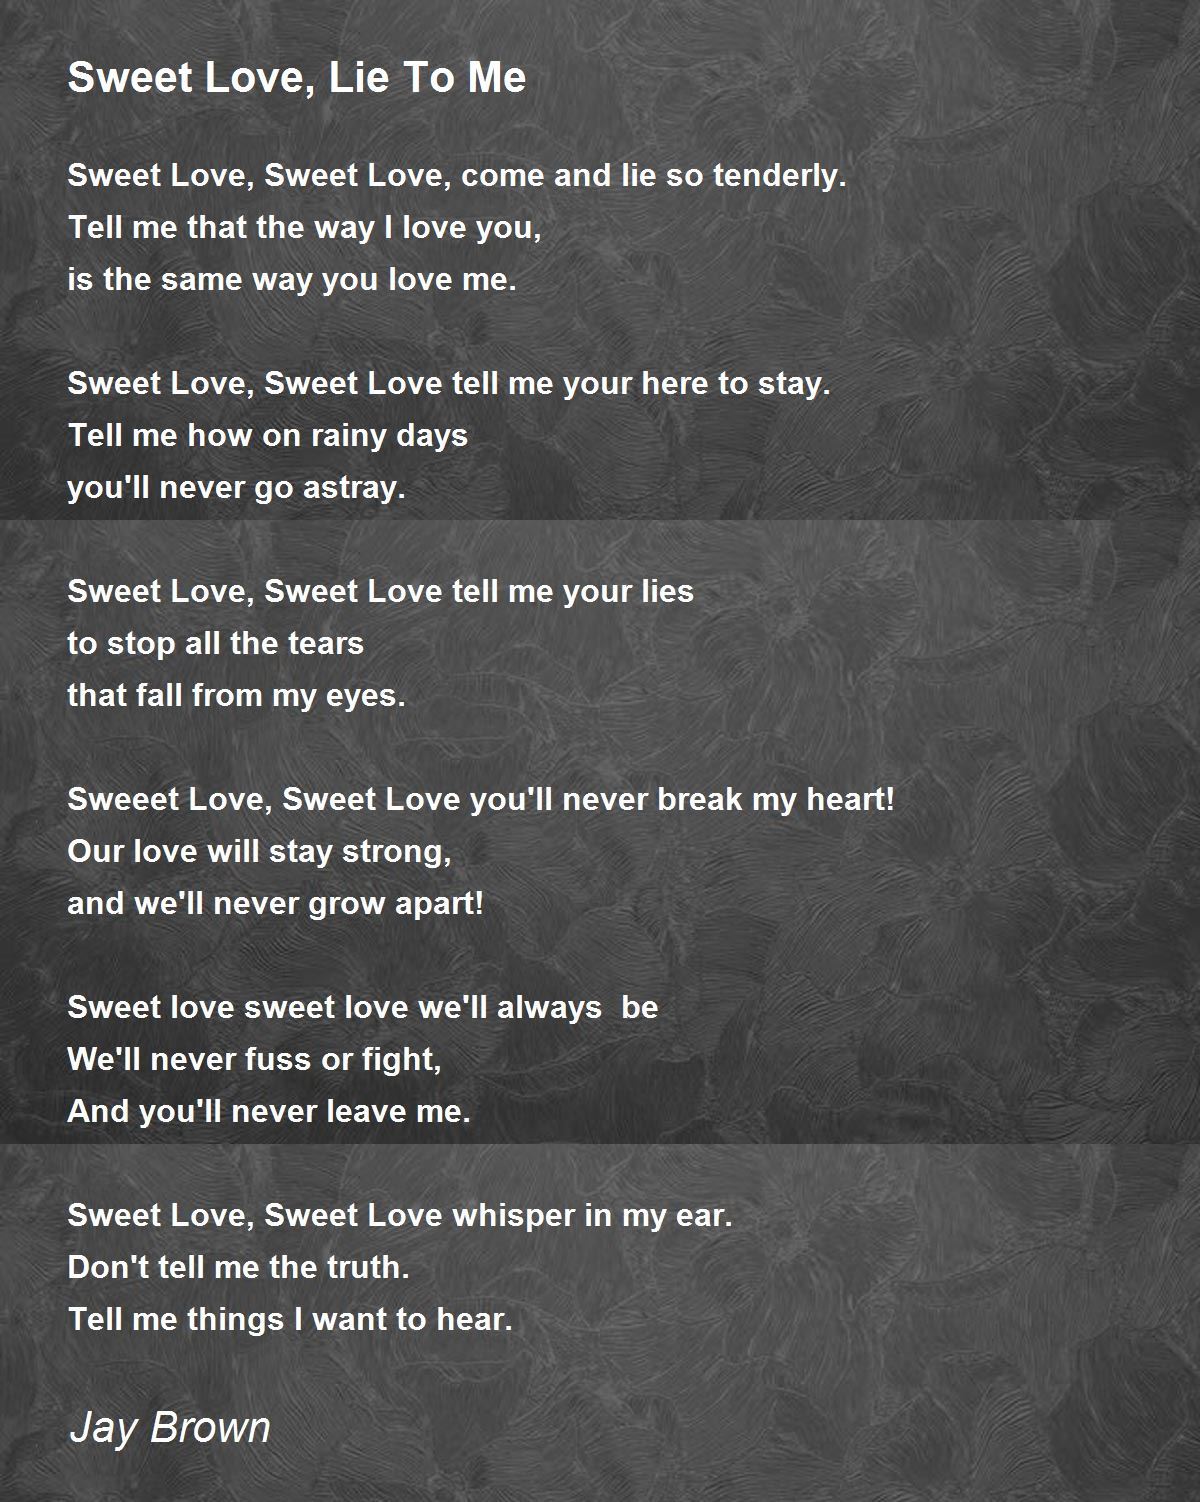 Sweet Love, Lie To Me - Sweet Love, Lie To Me Poem by Jay Brown